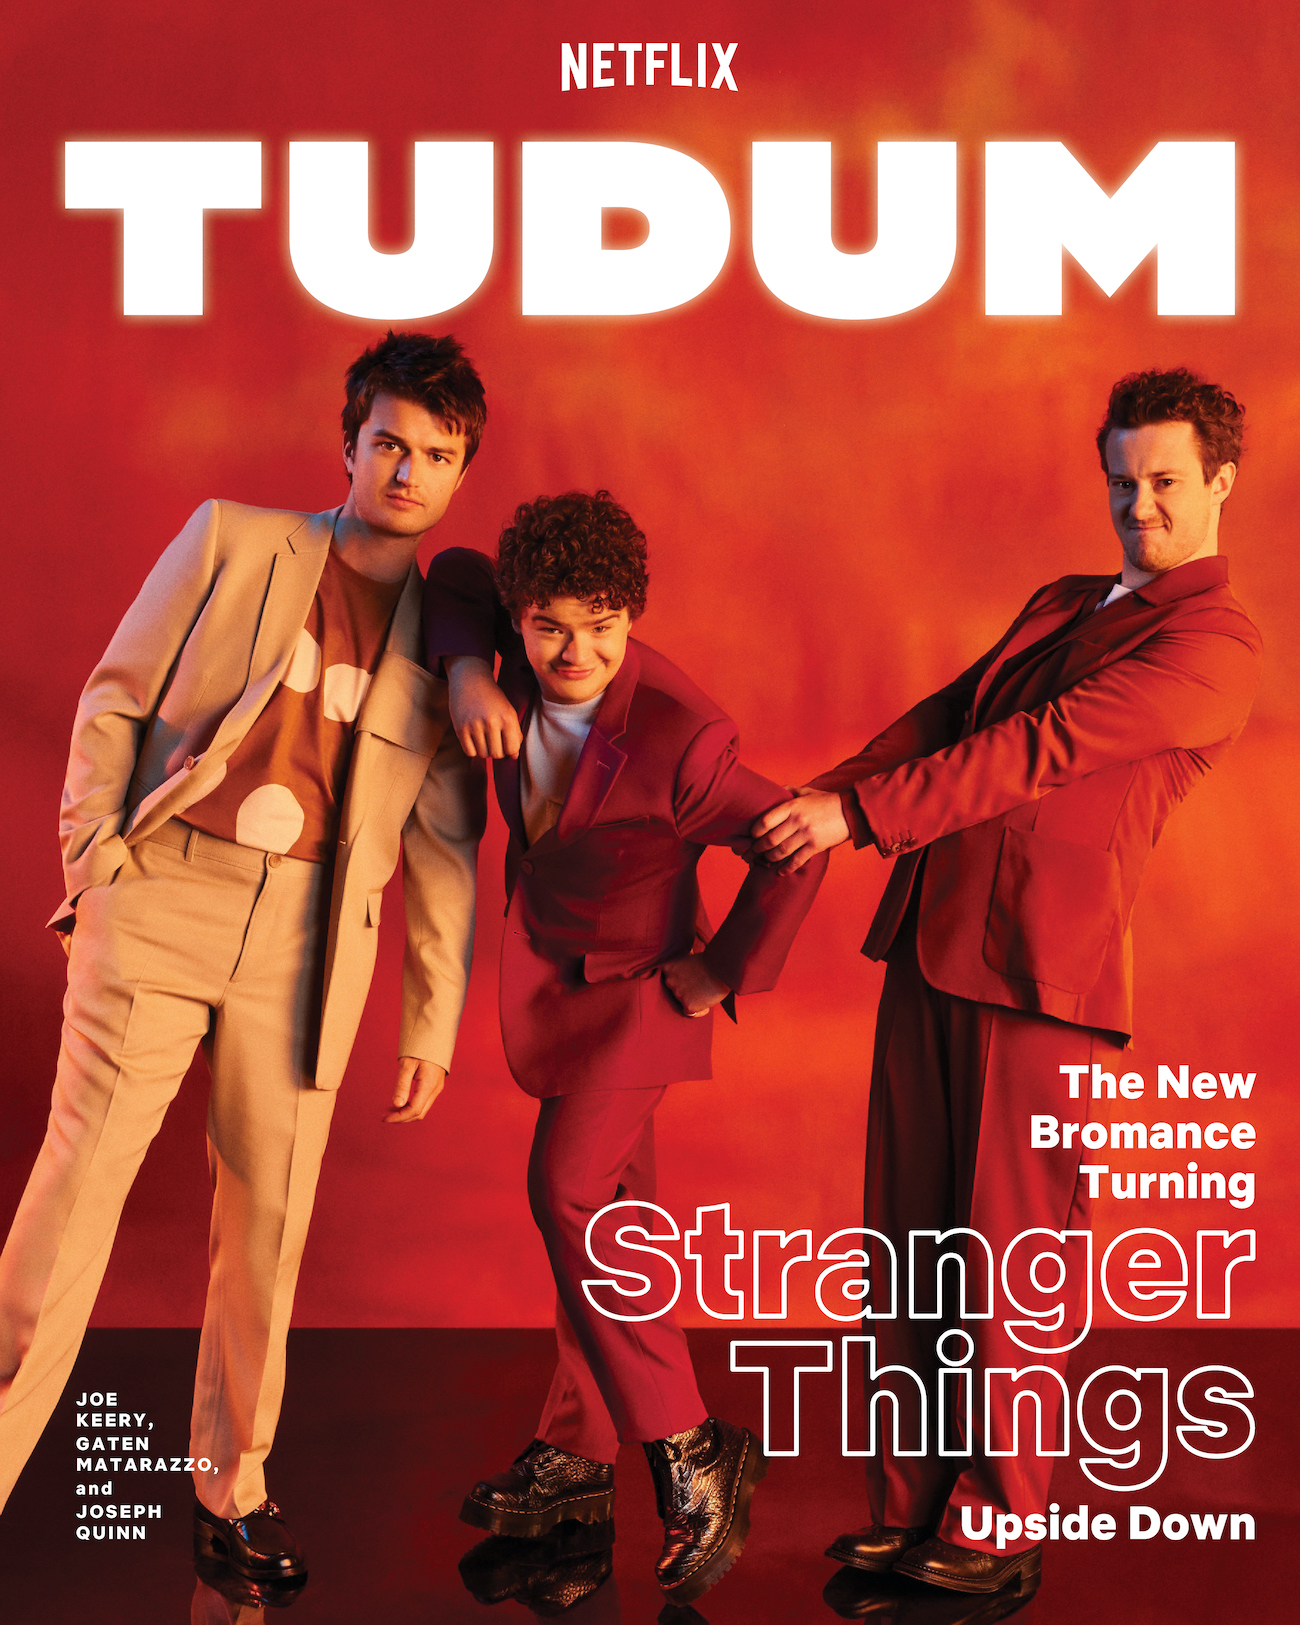 Joe Keery, Gaten Matarazzo and Joseph Quinn - Tudum Cover - 2022